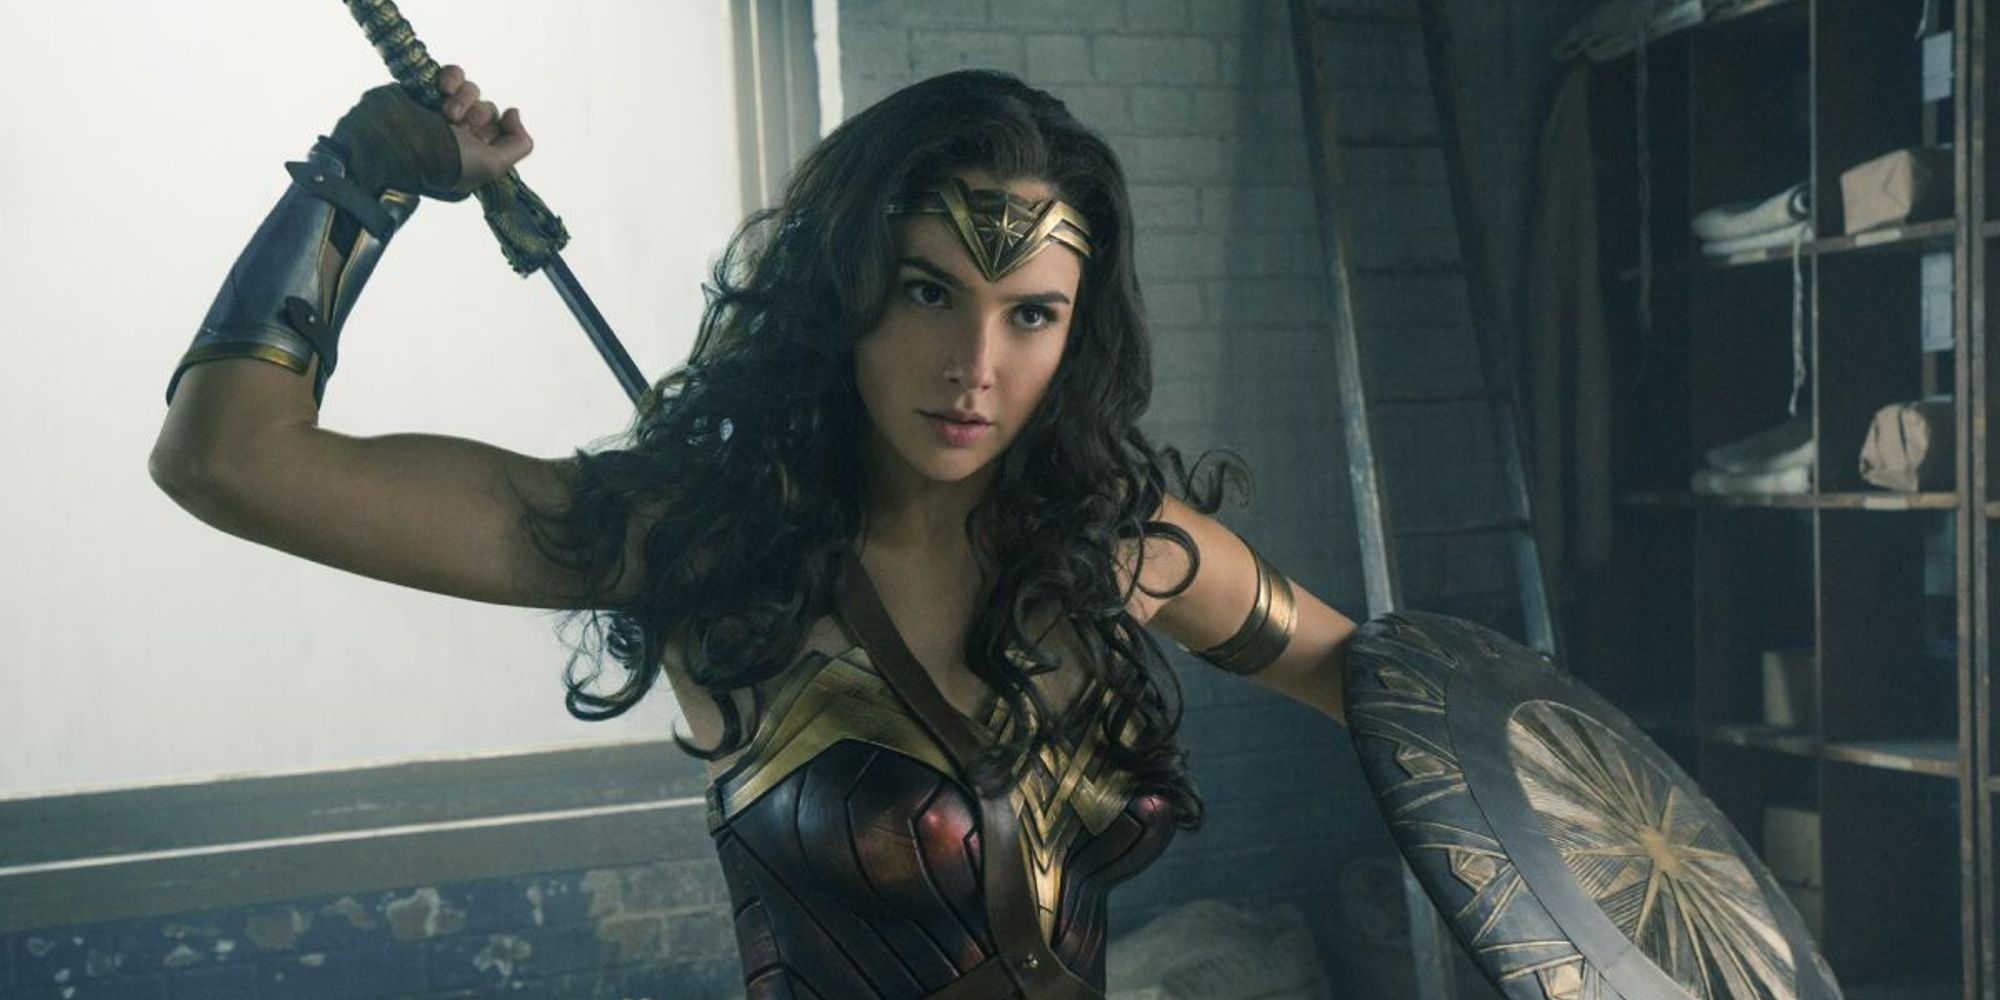 Shazam Updates on X: Gal Gadot as Wonder Woman behind the scenes